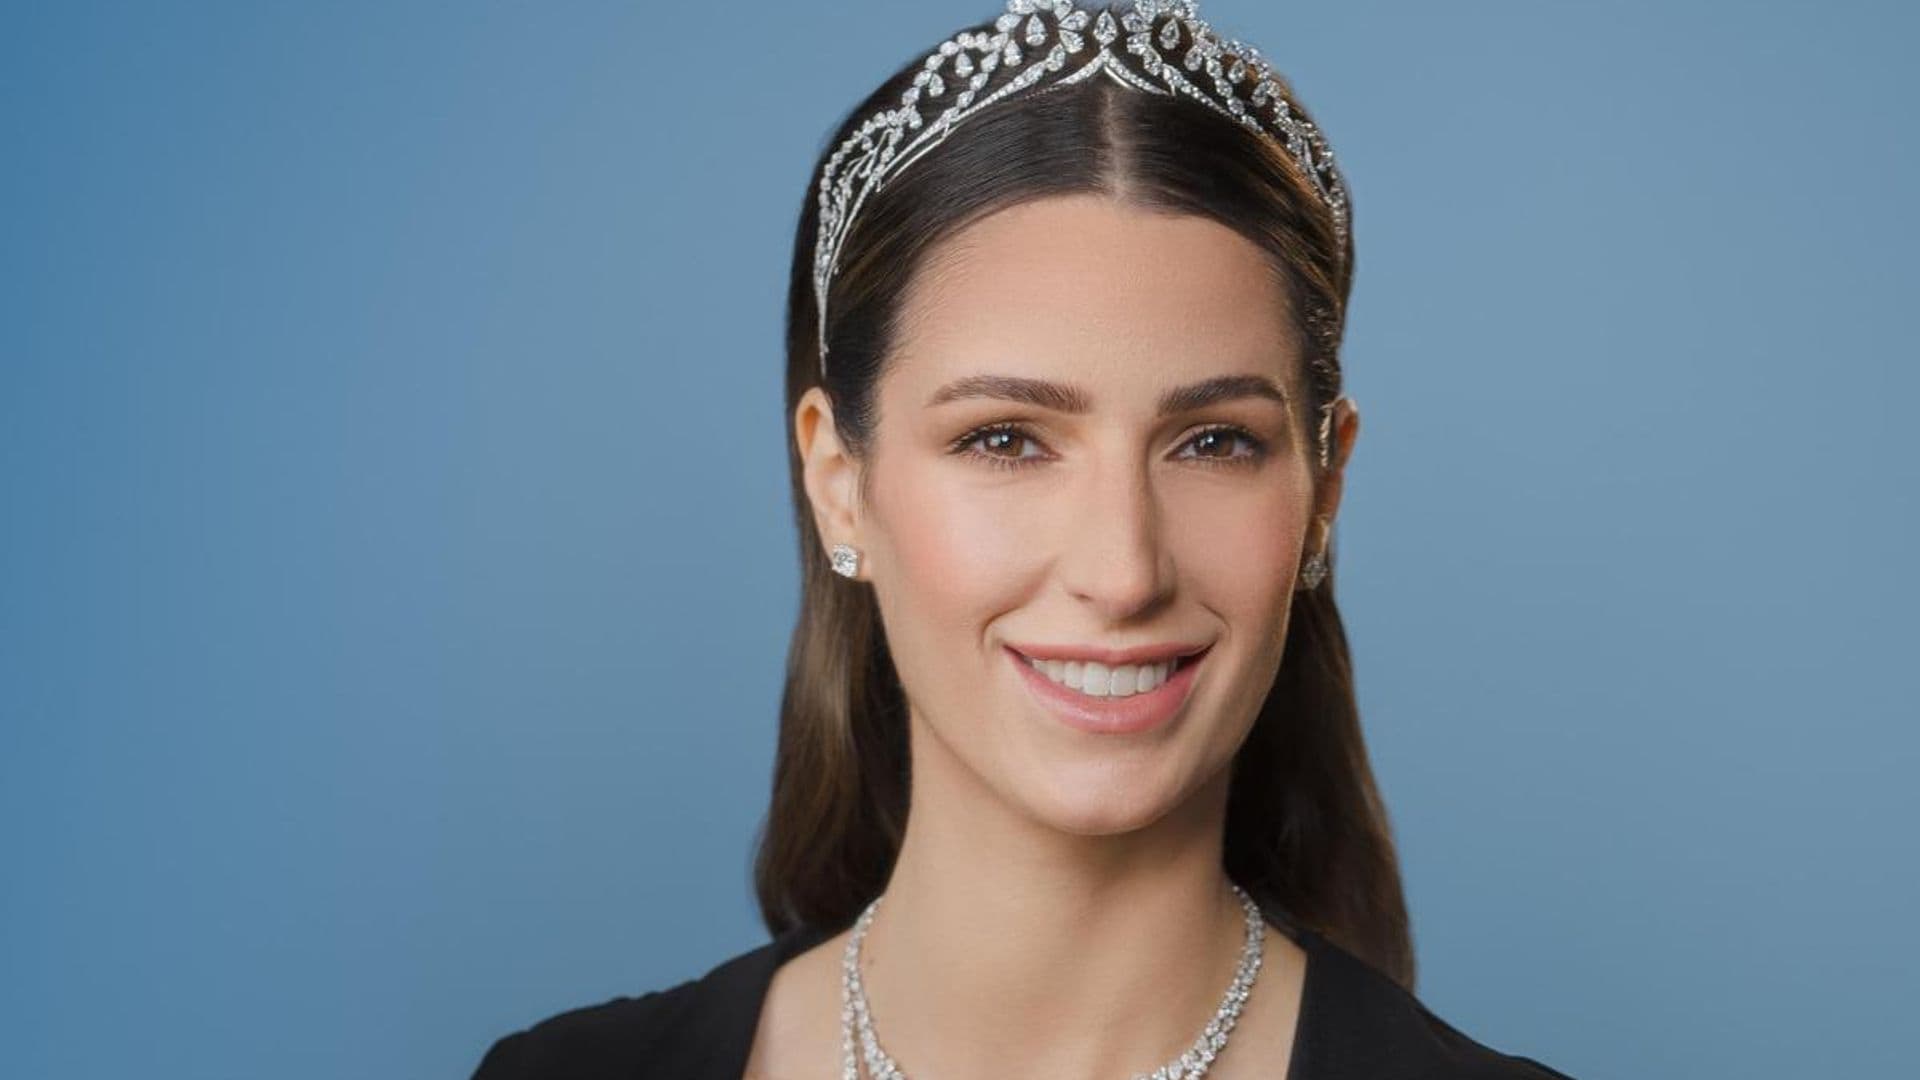 Mom-to-be Princess Rajwa wears her wedding tiara in new official portrait